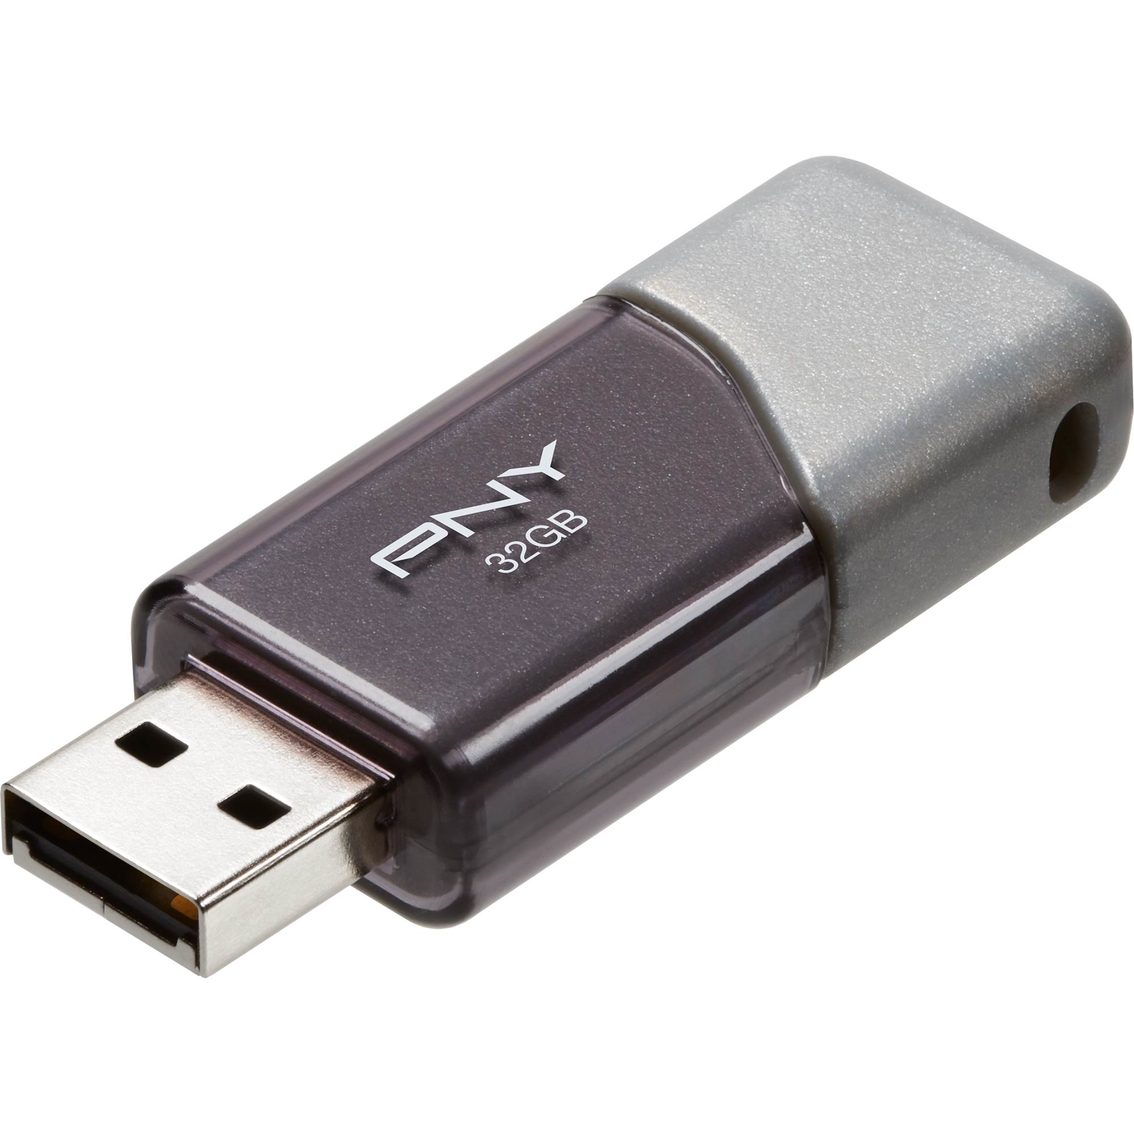 Pny 32gb Turbo 3.0 Usb Flash Drive | Usb Flash Drives | Shop Exchange